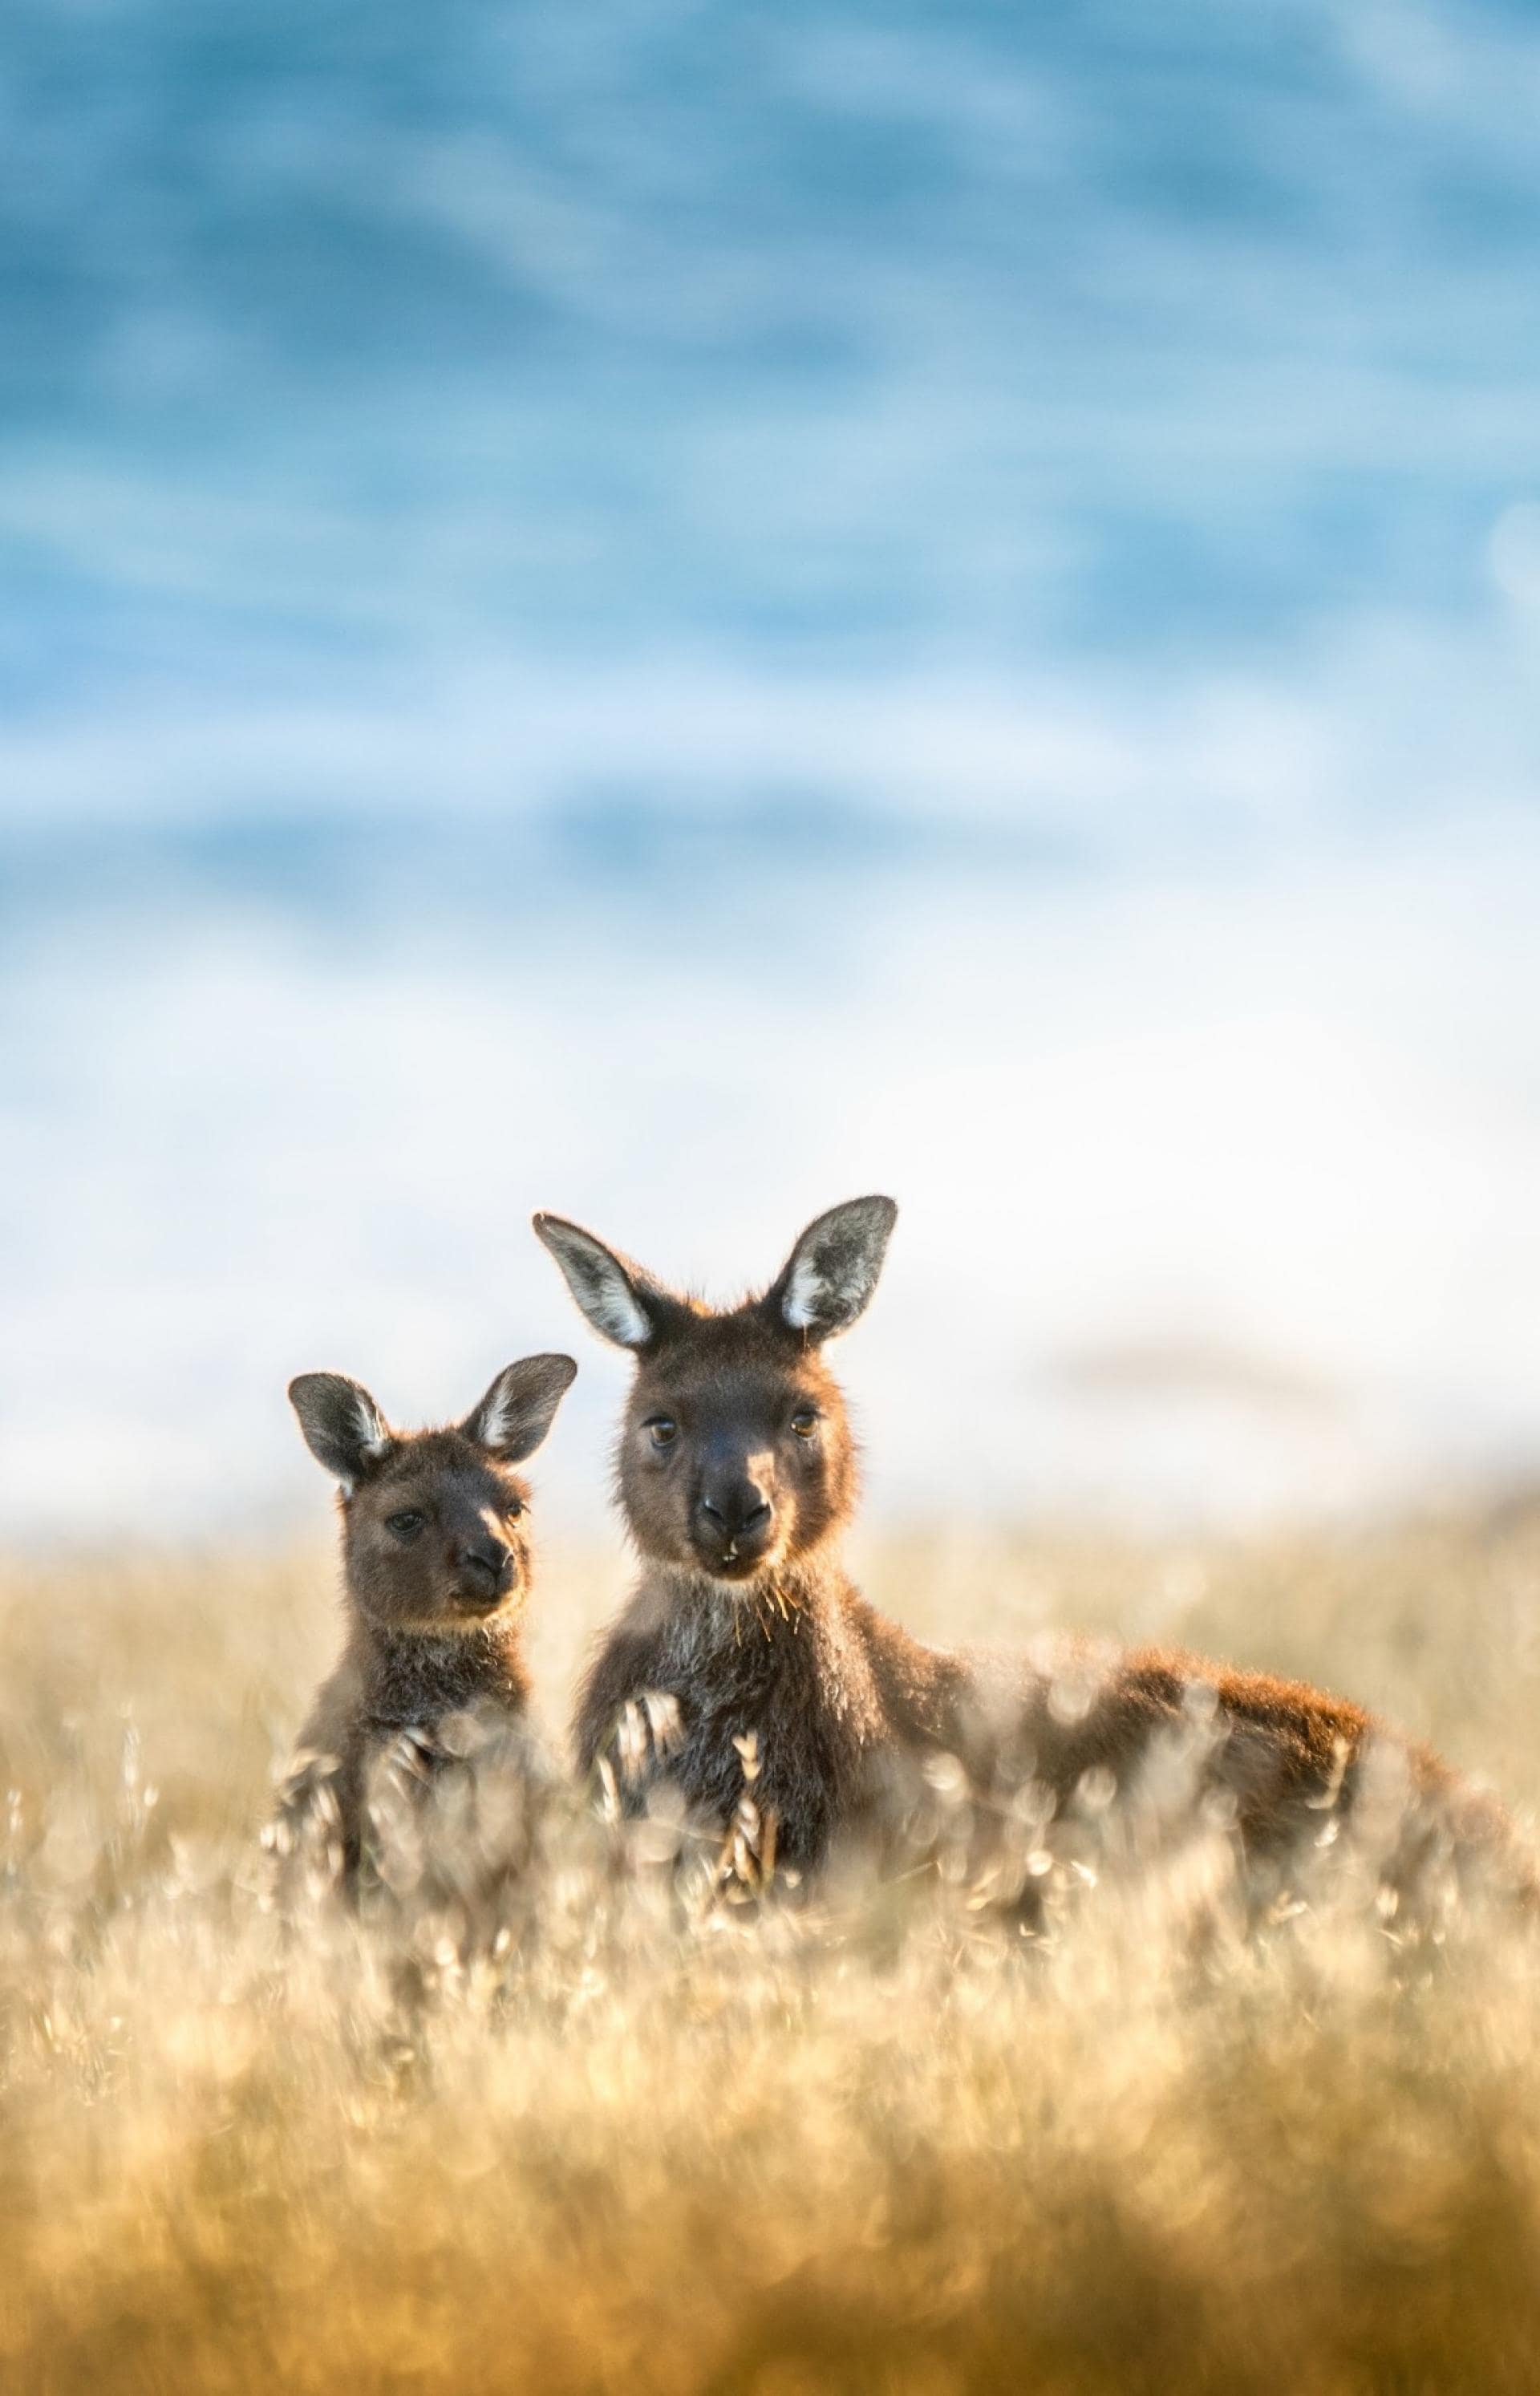 Two kangaroos at Cape Willoughby, Kangaroo Island, South Australia © South Australian Tourism Commission